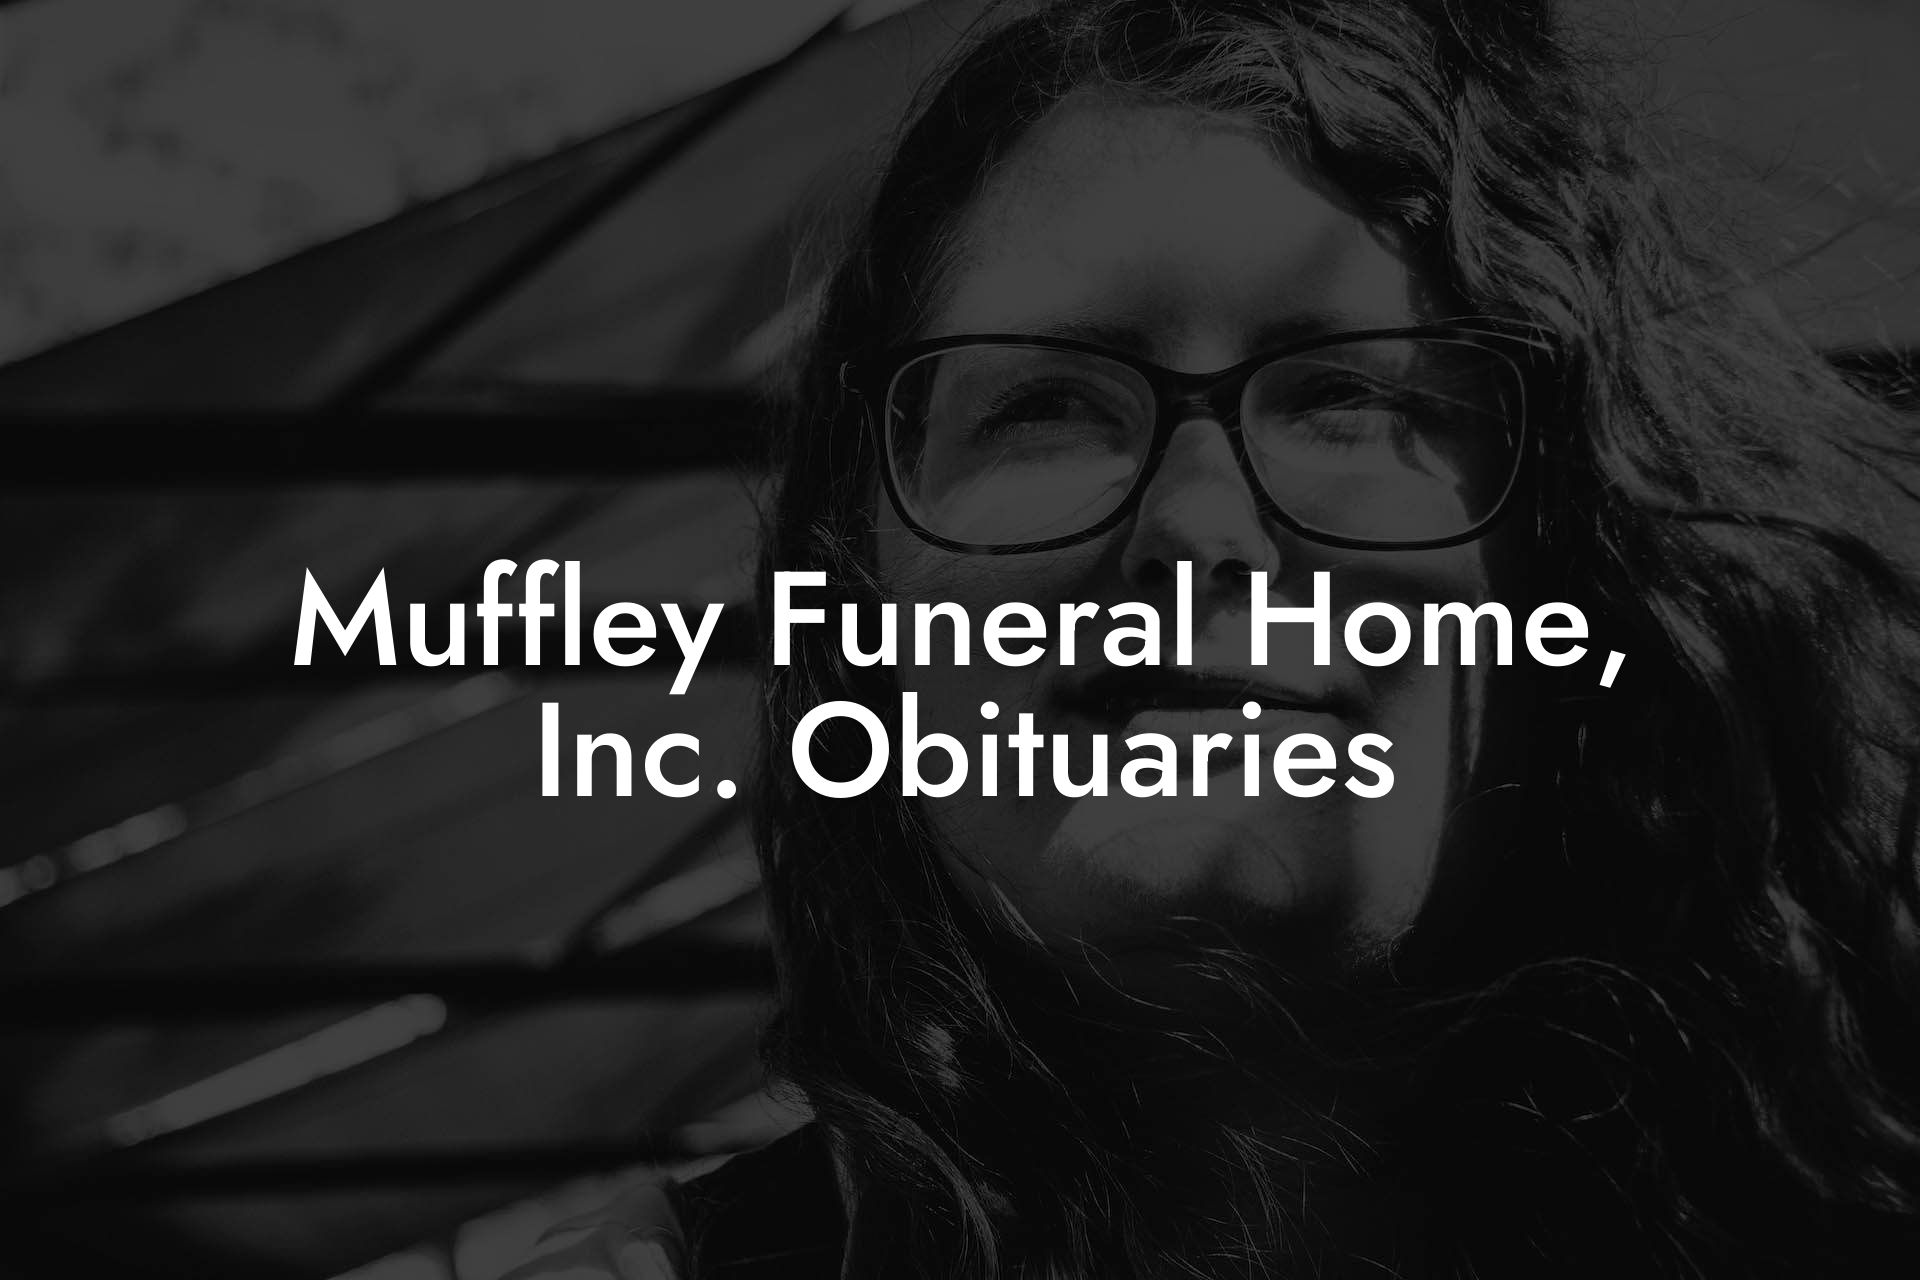 Muffley Funeral Home, Inc. Obituaries